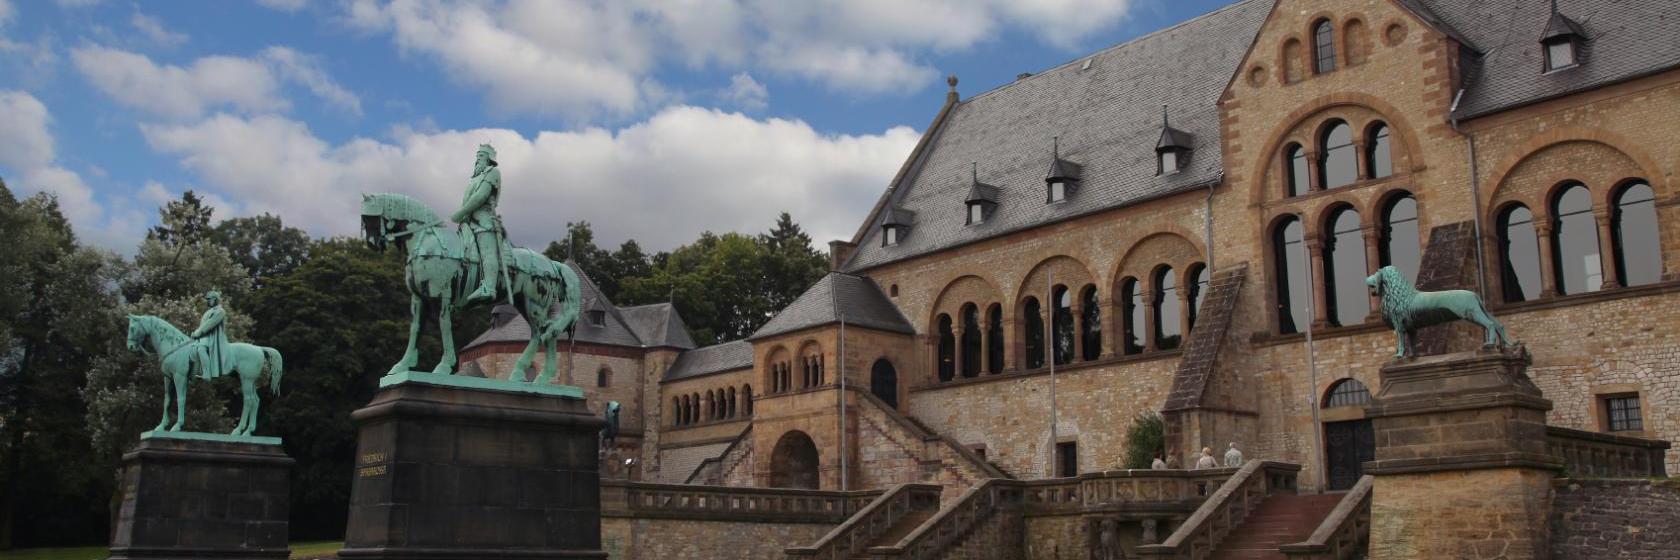 10 Best Goslar Hotels Germany From 37